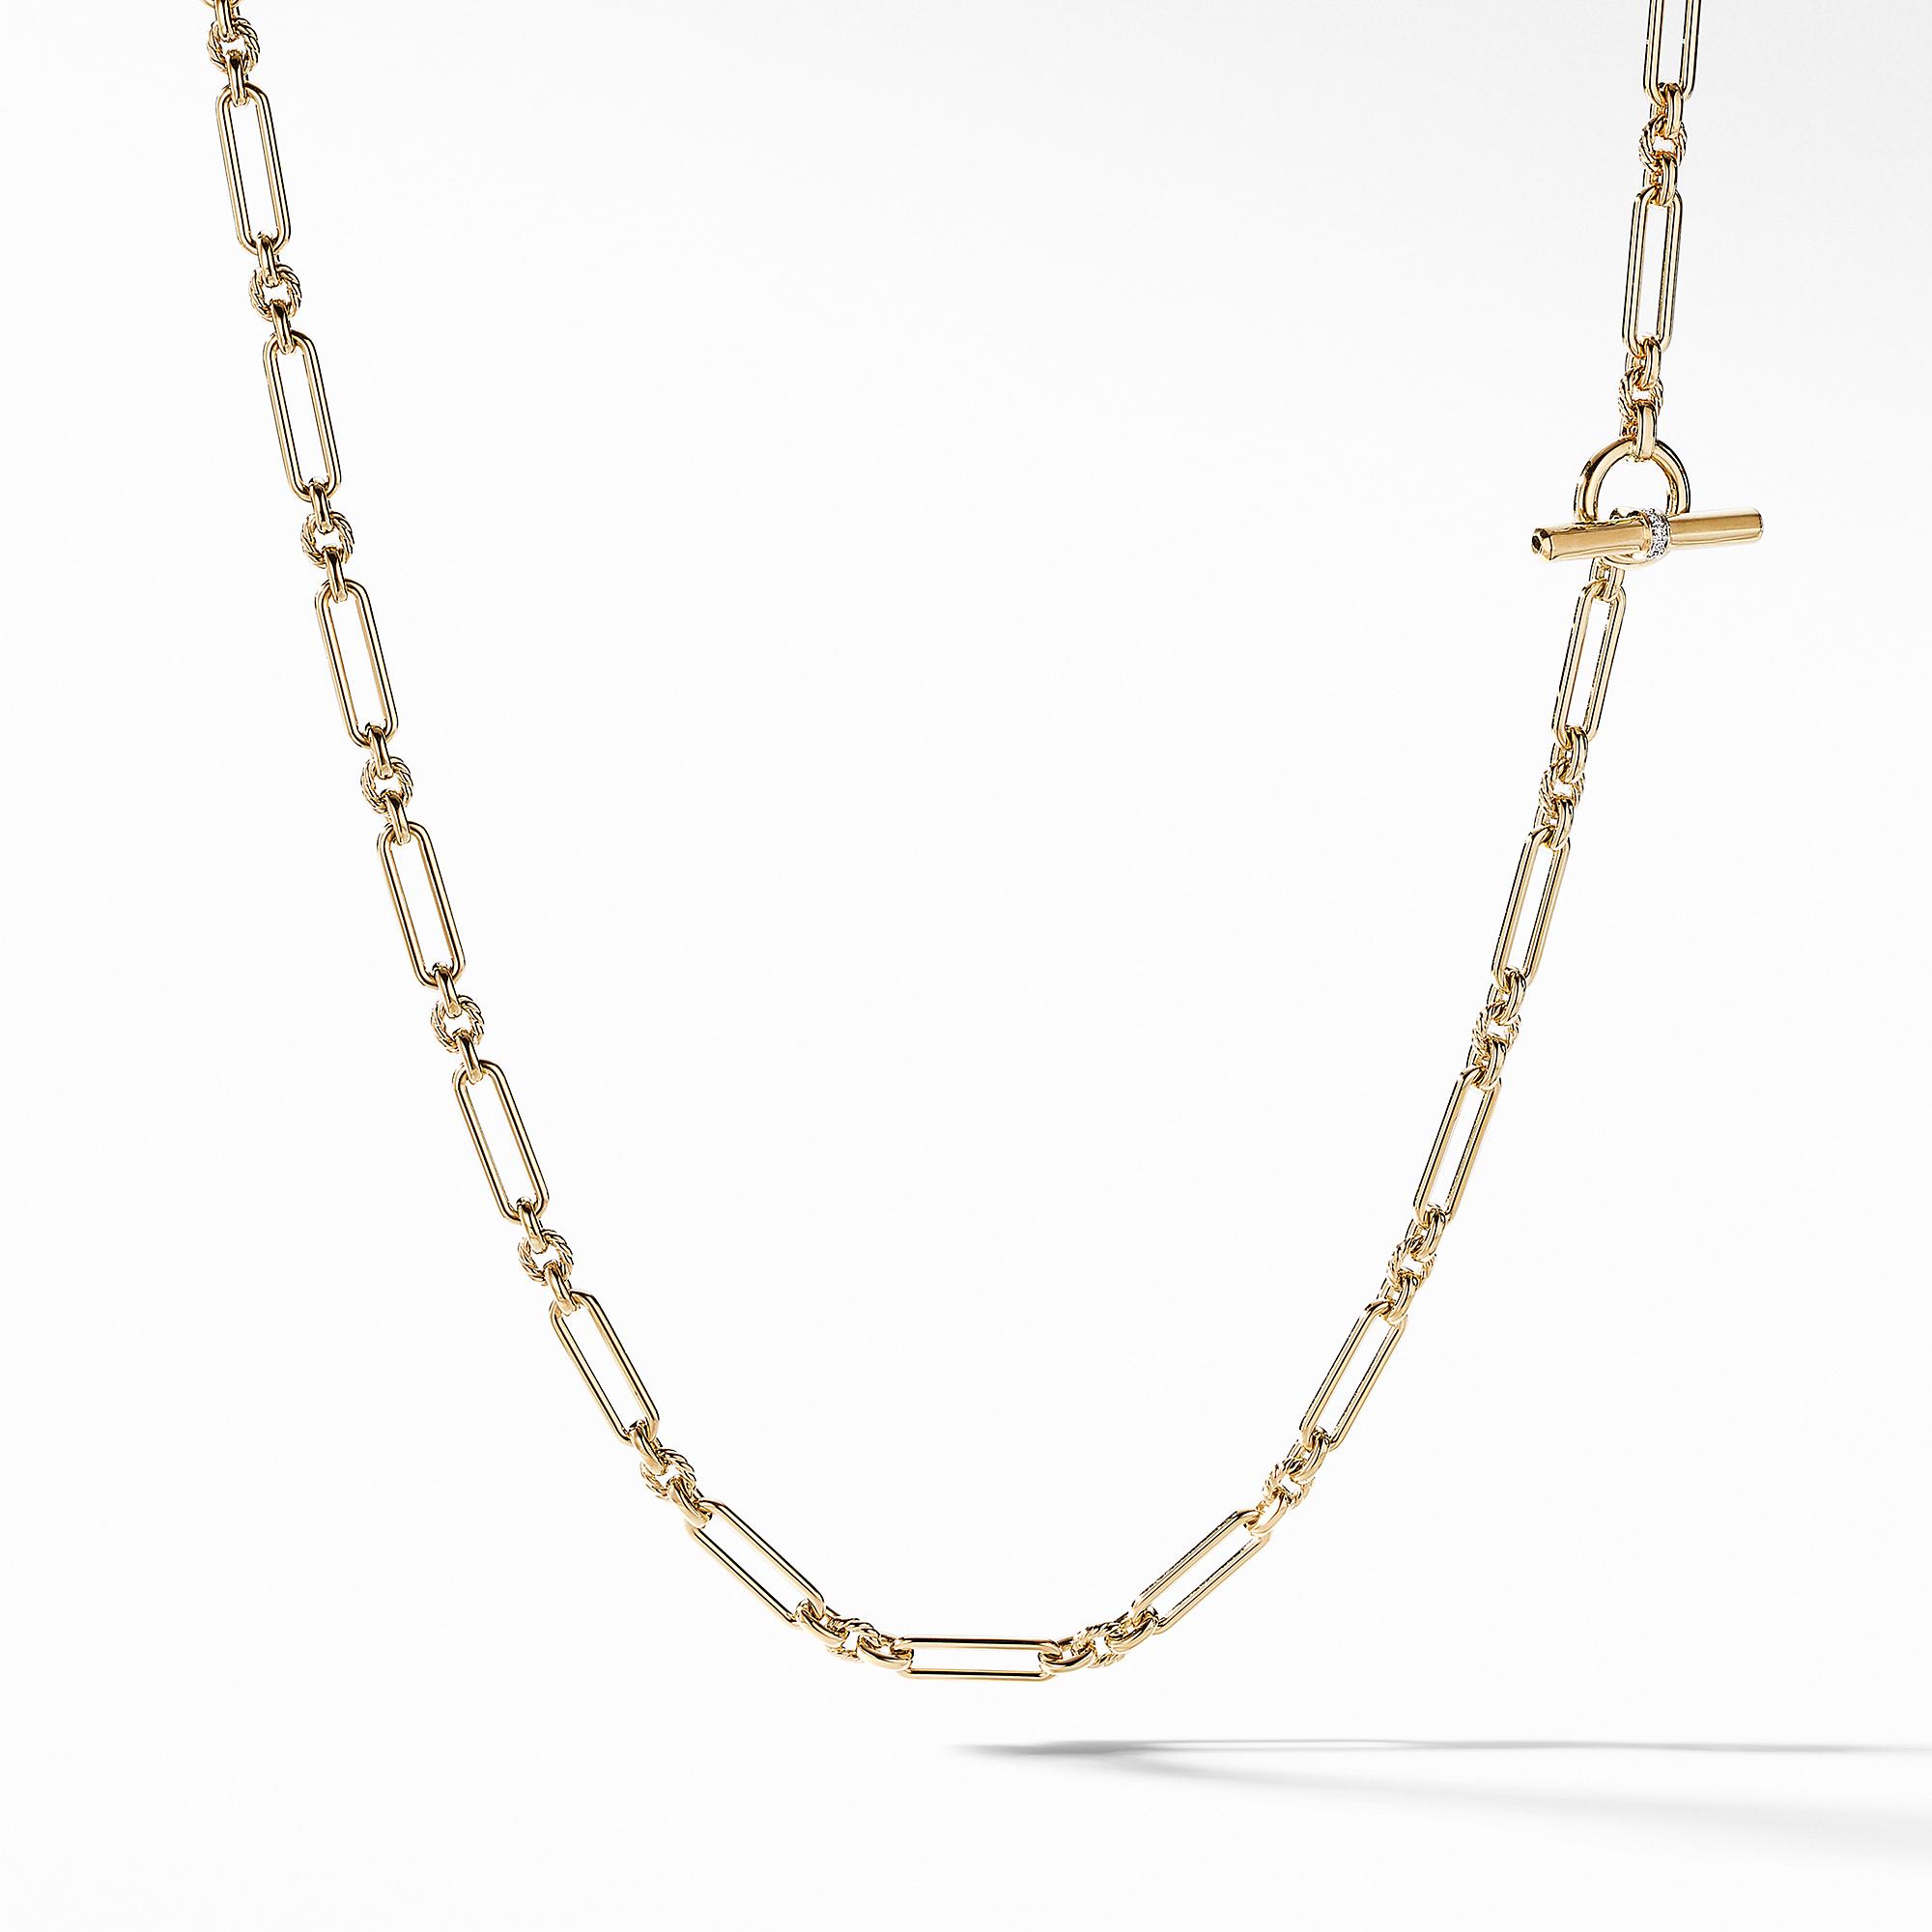 David Yurman Lexington Toggle Clasp Chain Necklace in 18K Yellow Gold with Diamonds, 36"